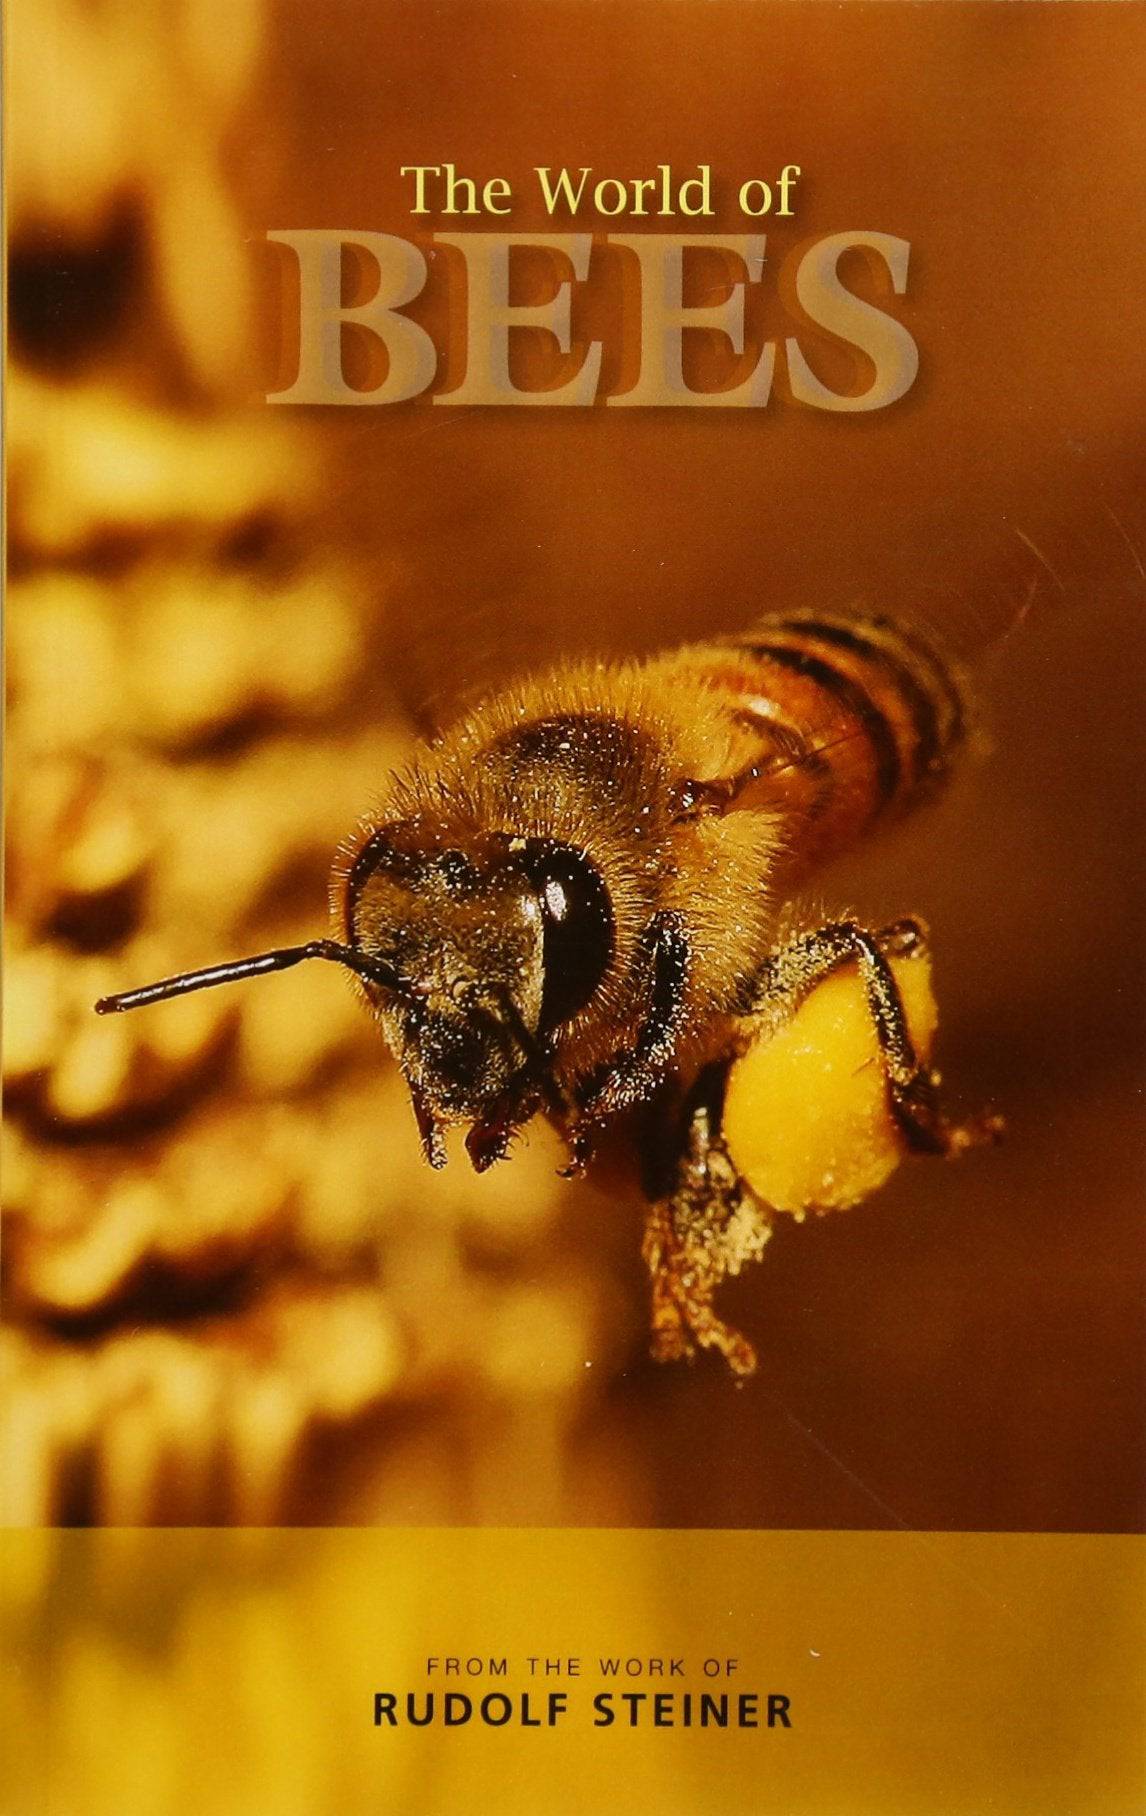 The World of Bees by Rudolf Steiner - The Josephine Porter Institute